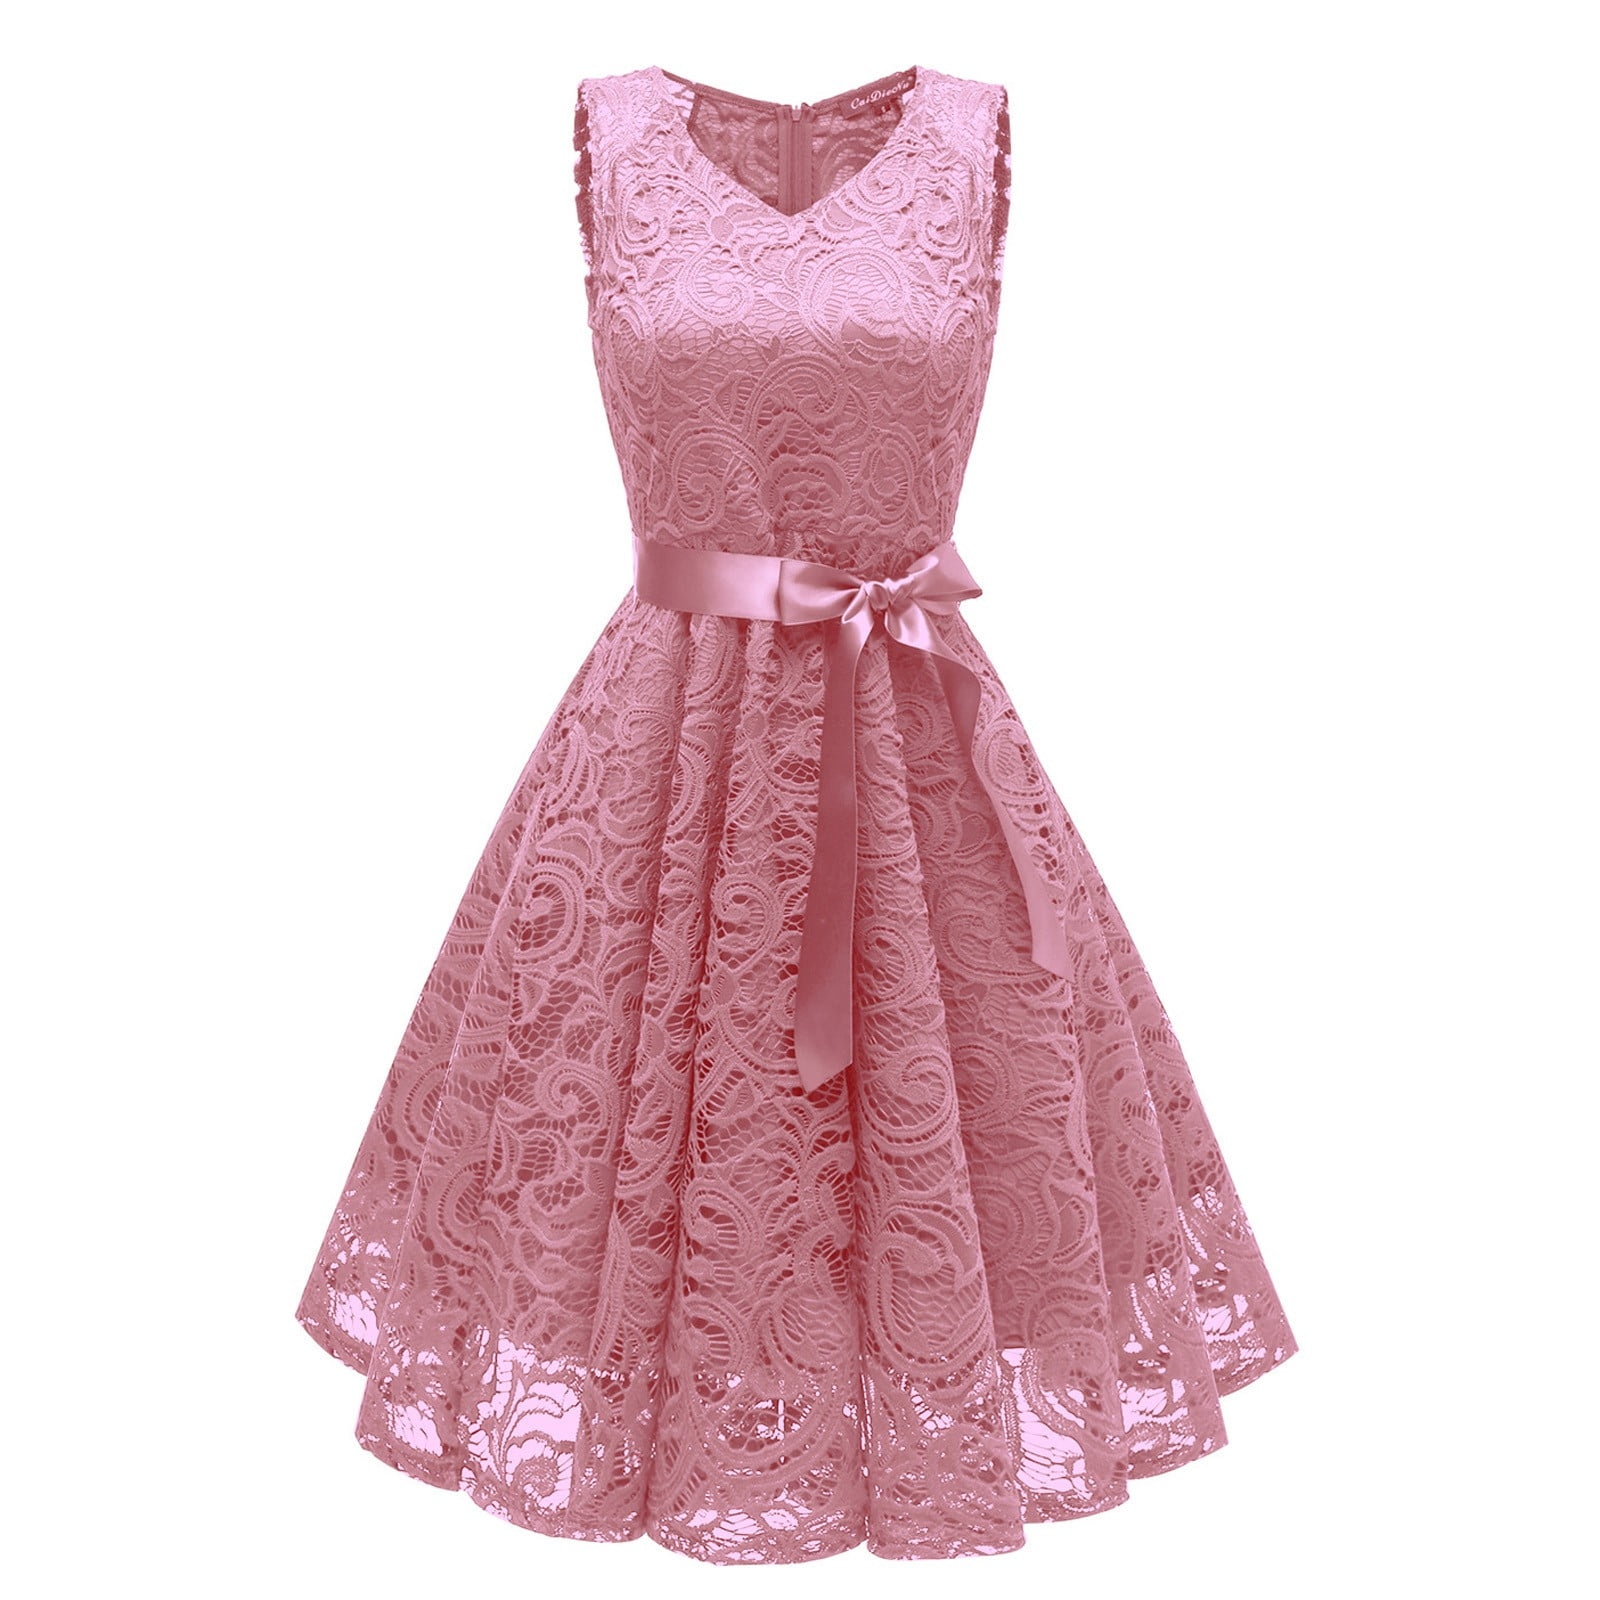 Finelylove Pink Cocktail Dress Plus Size Floral Dress For Women A-line ...